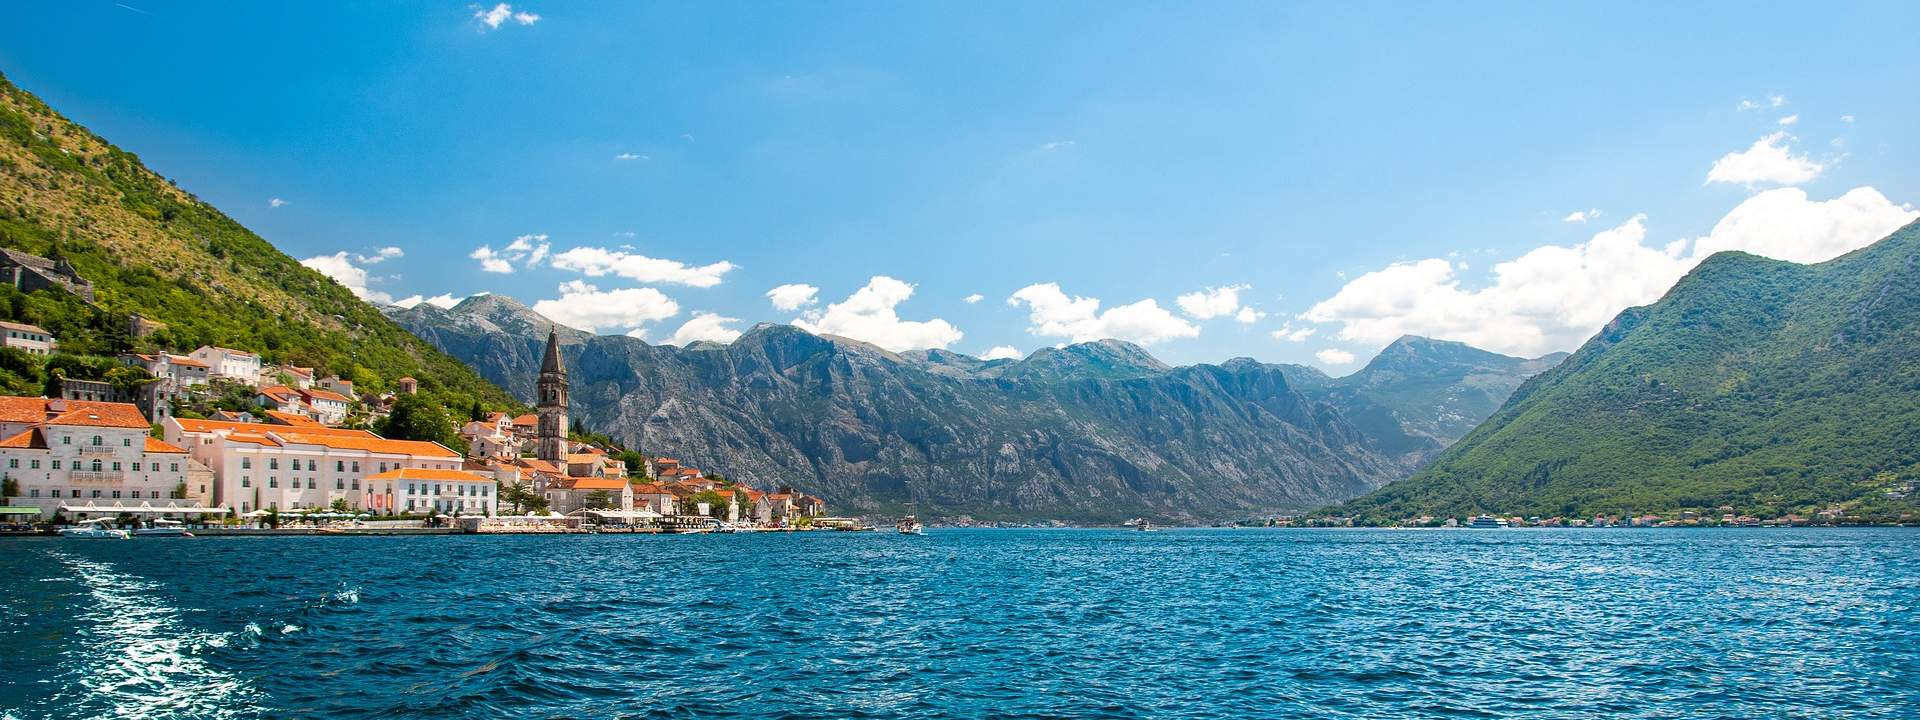 Sillonnez les superbes côtes de la mer Adriatique en catamaran